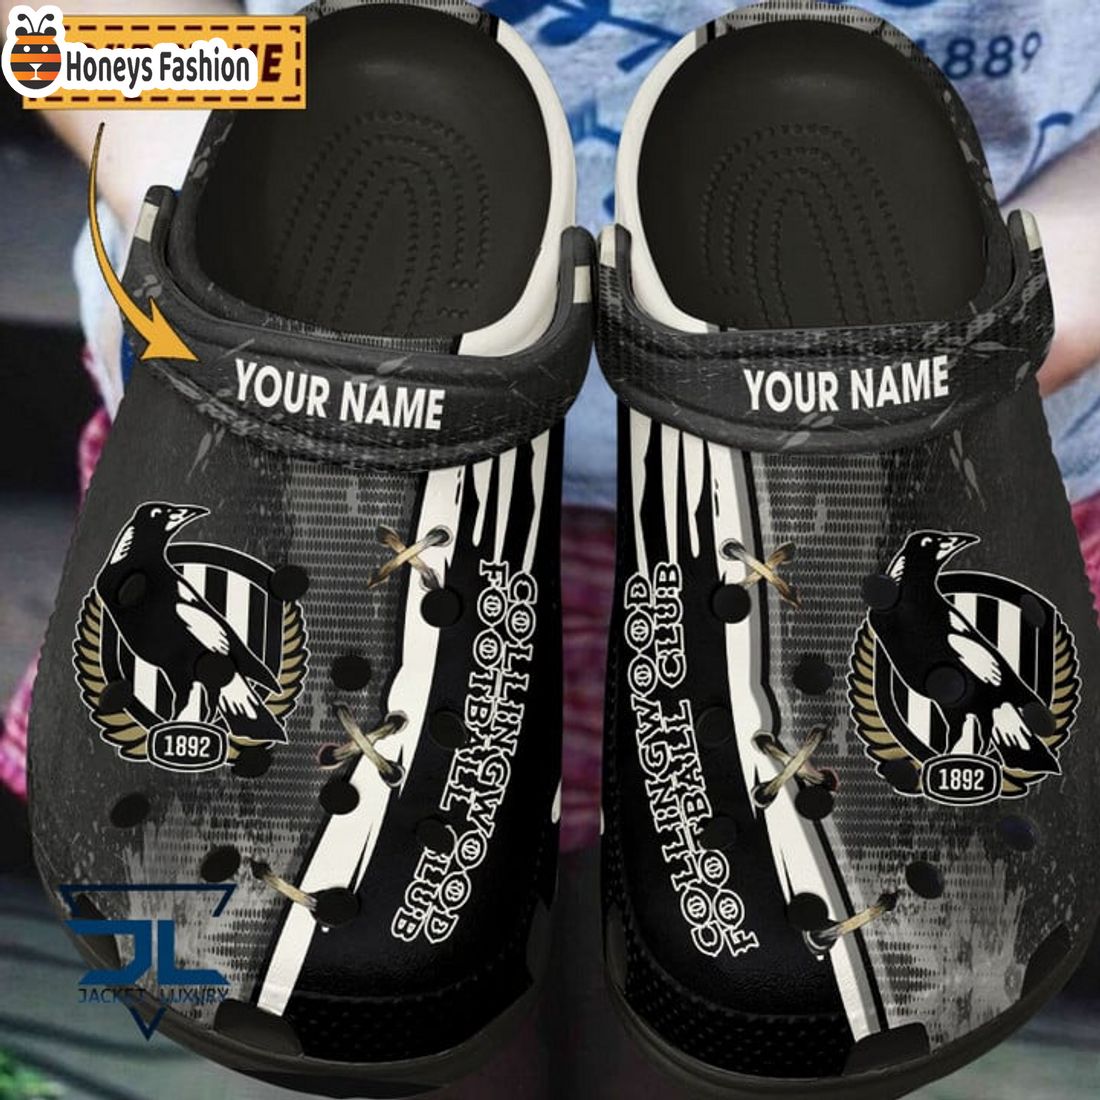 HOT Collingwood Football Club Custom Name Crocs Clog Shoes